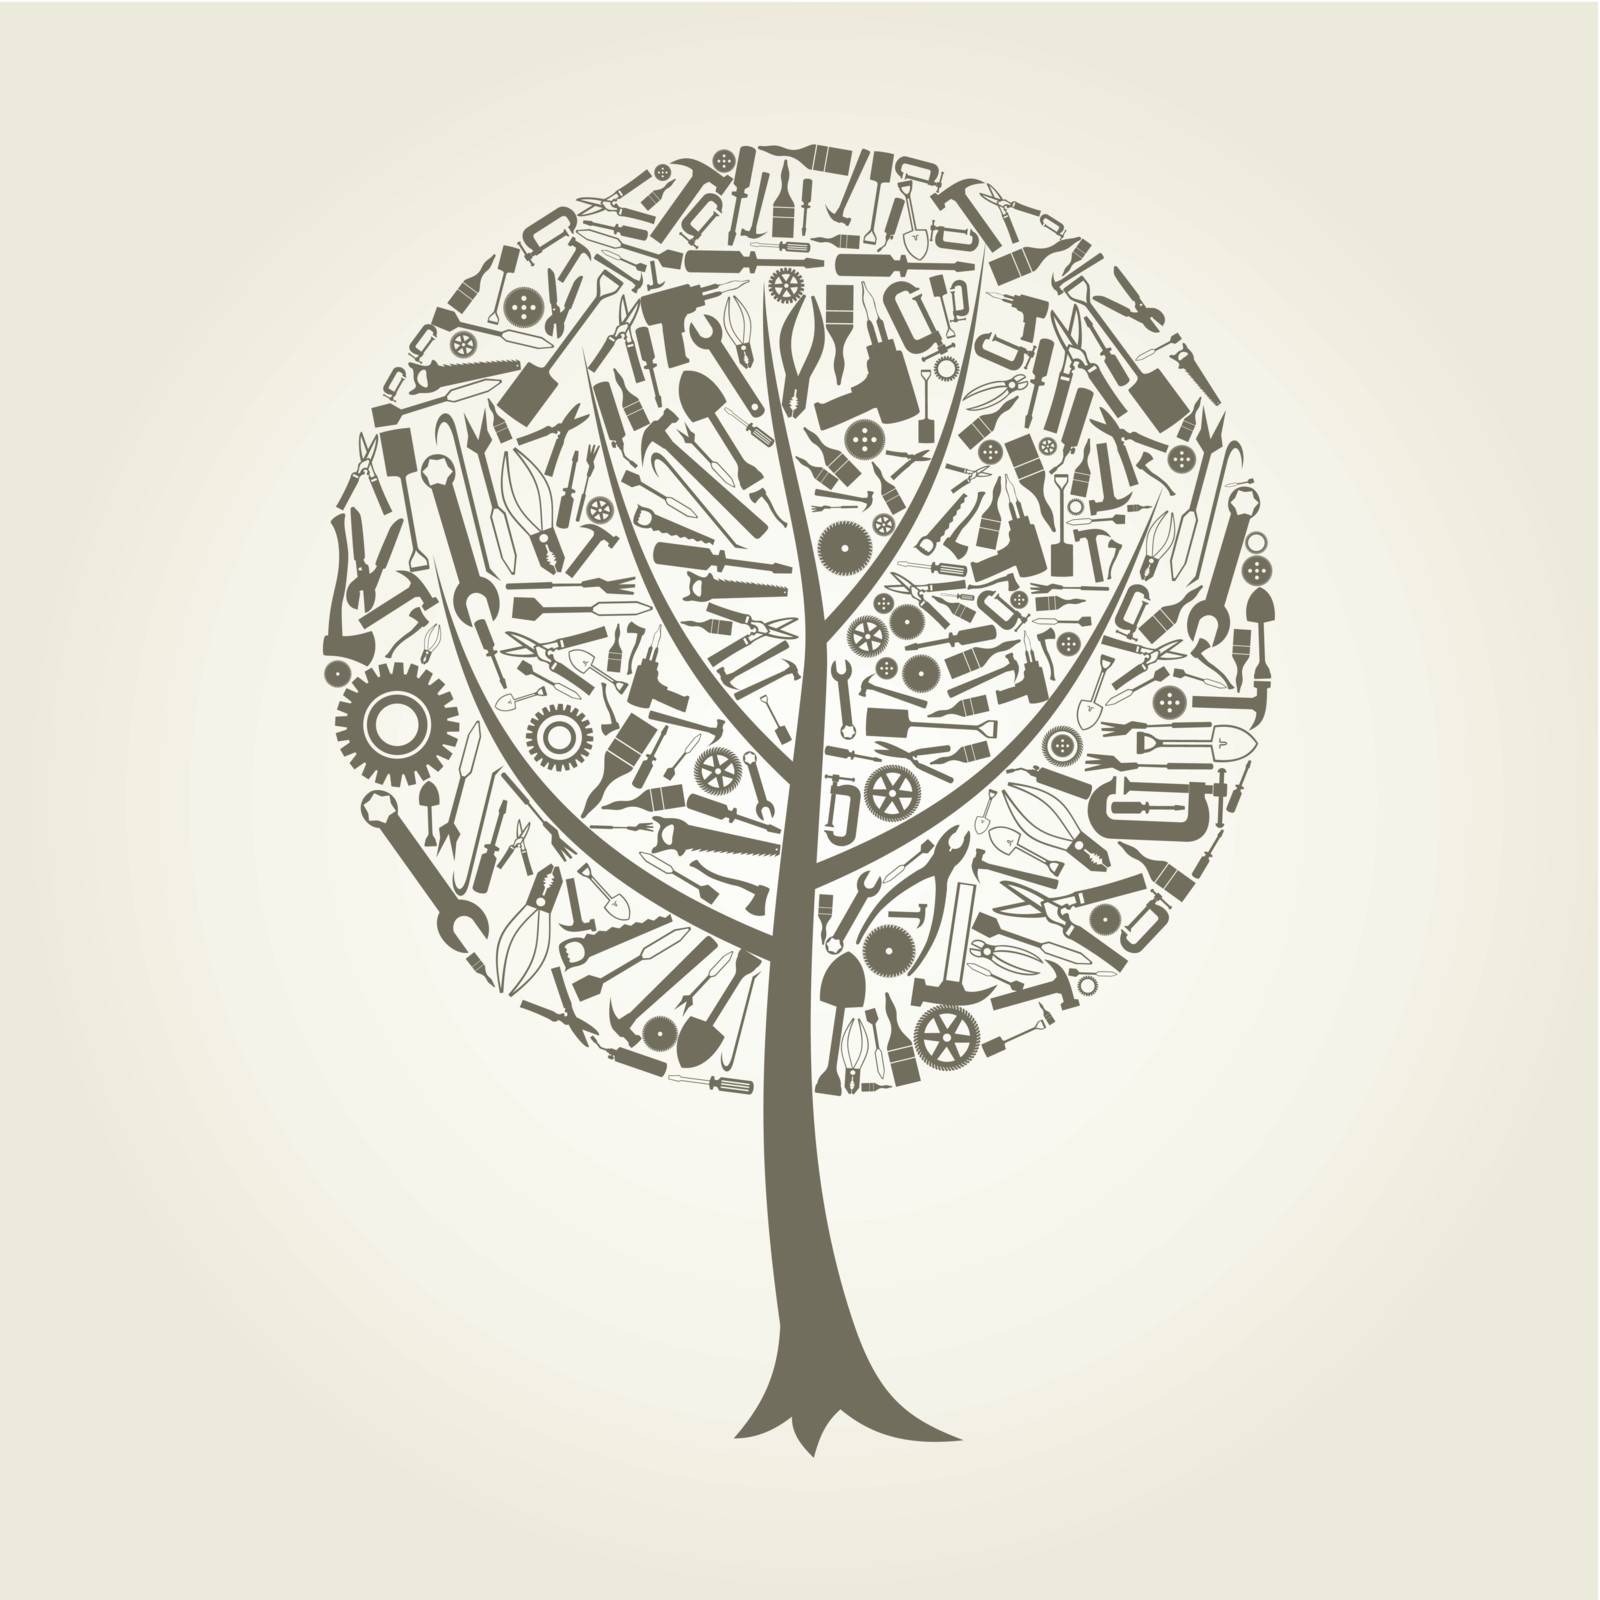 Tree the tool by aleksander1